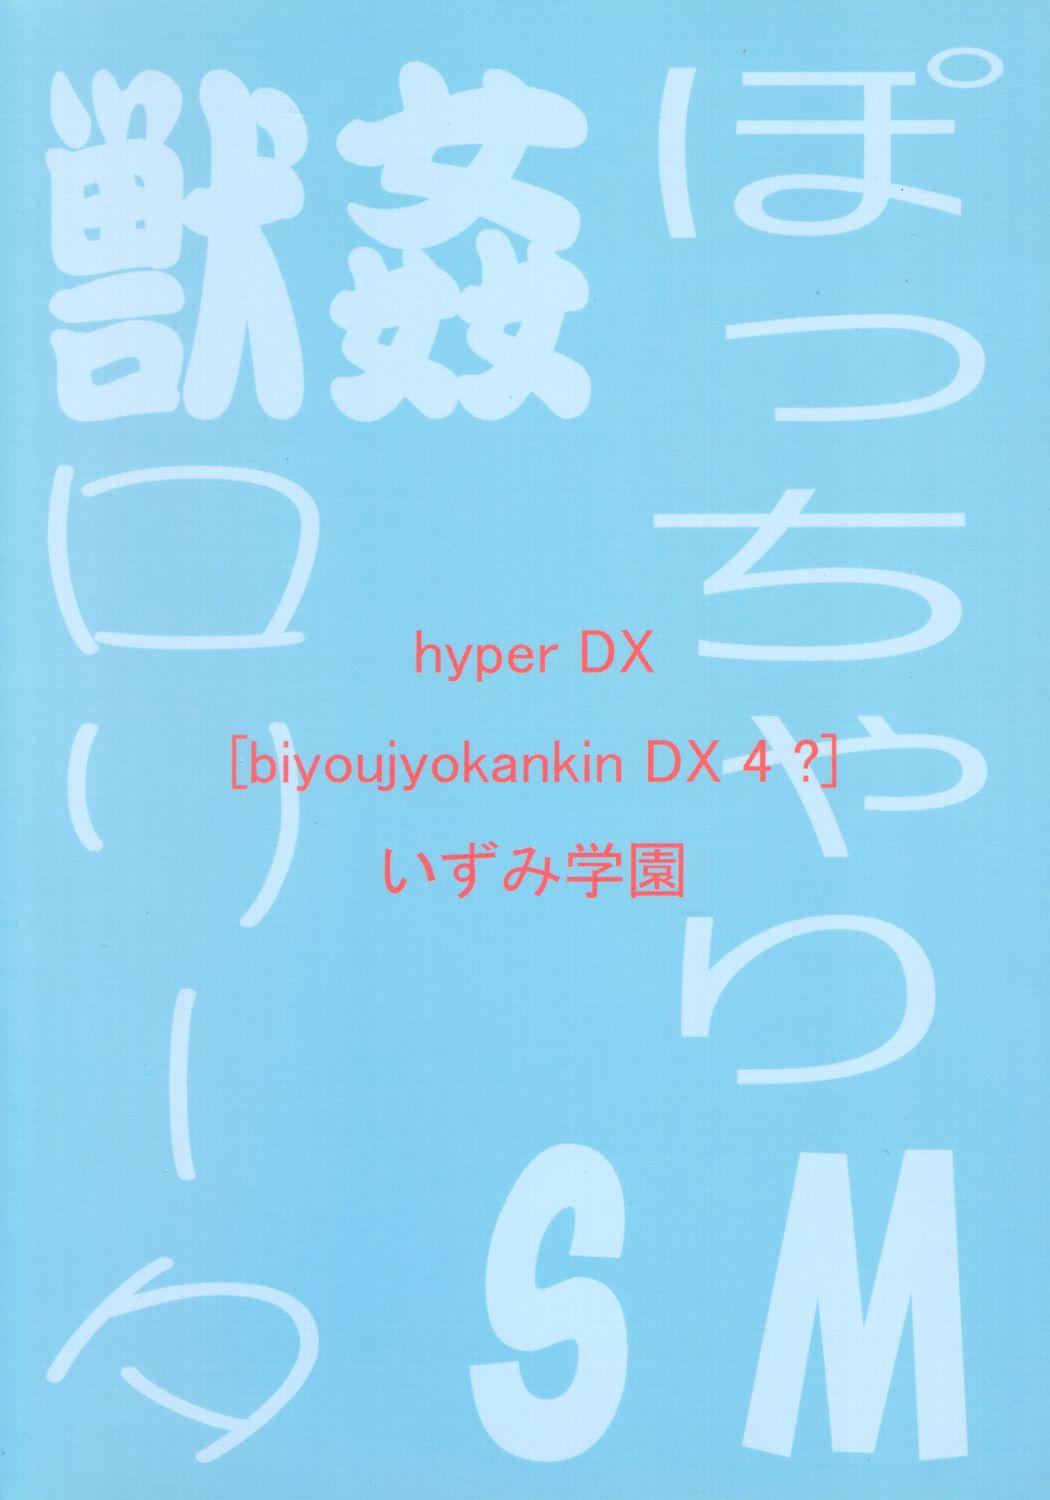 Hyper DX! 21